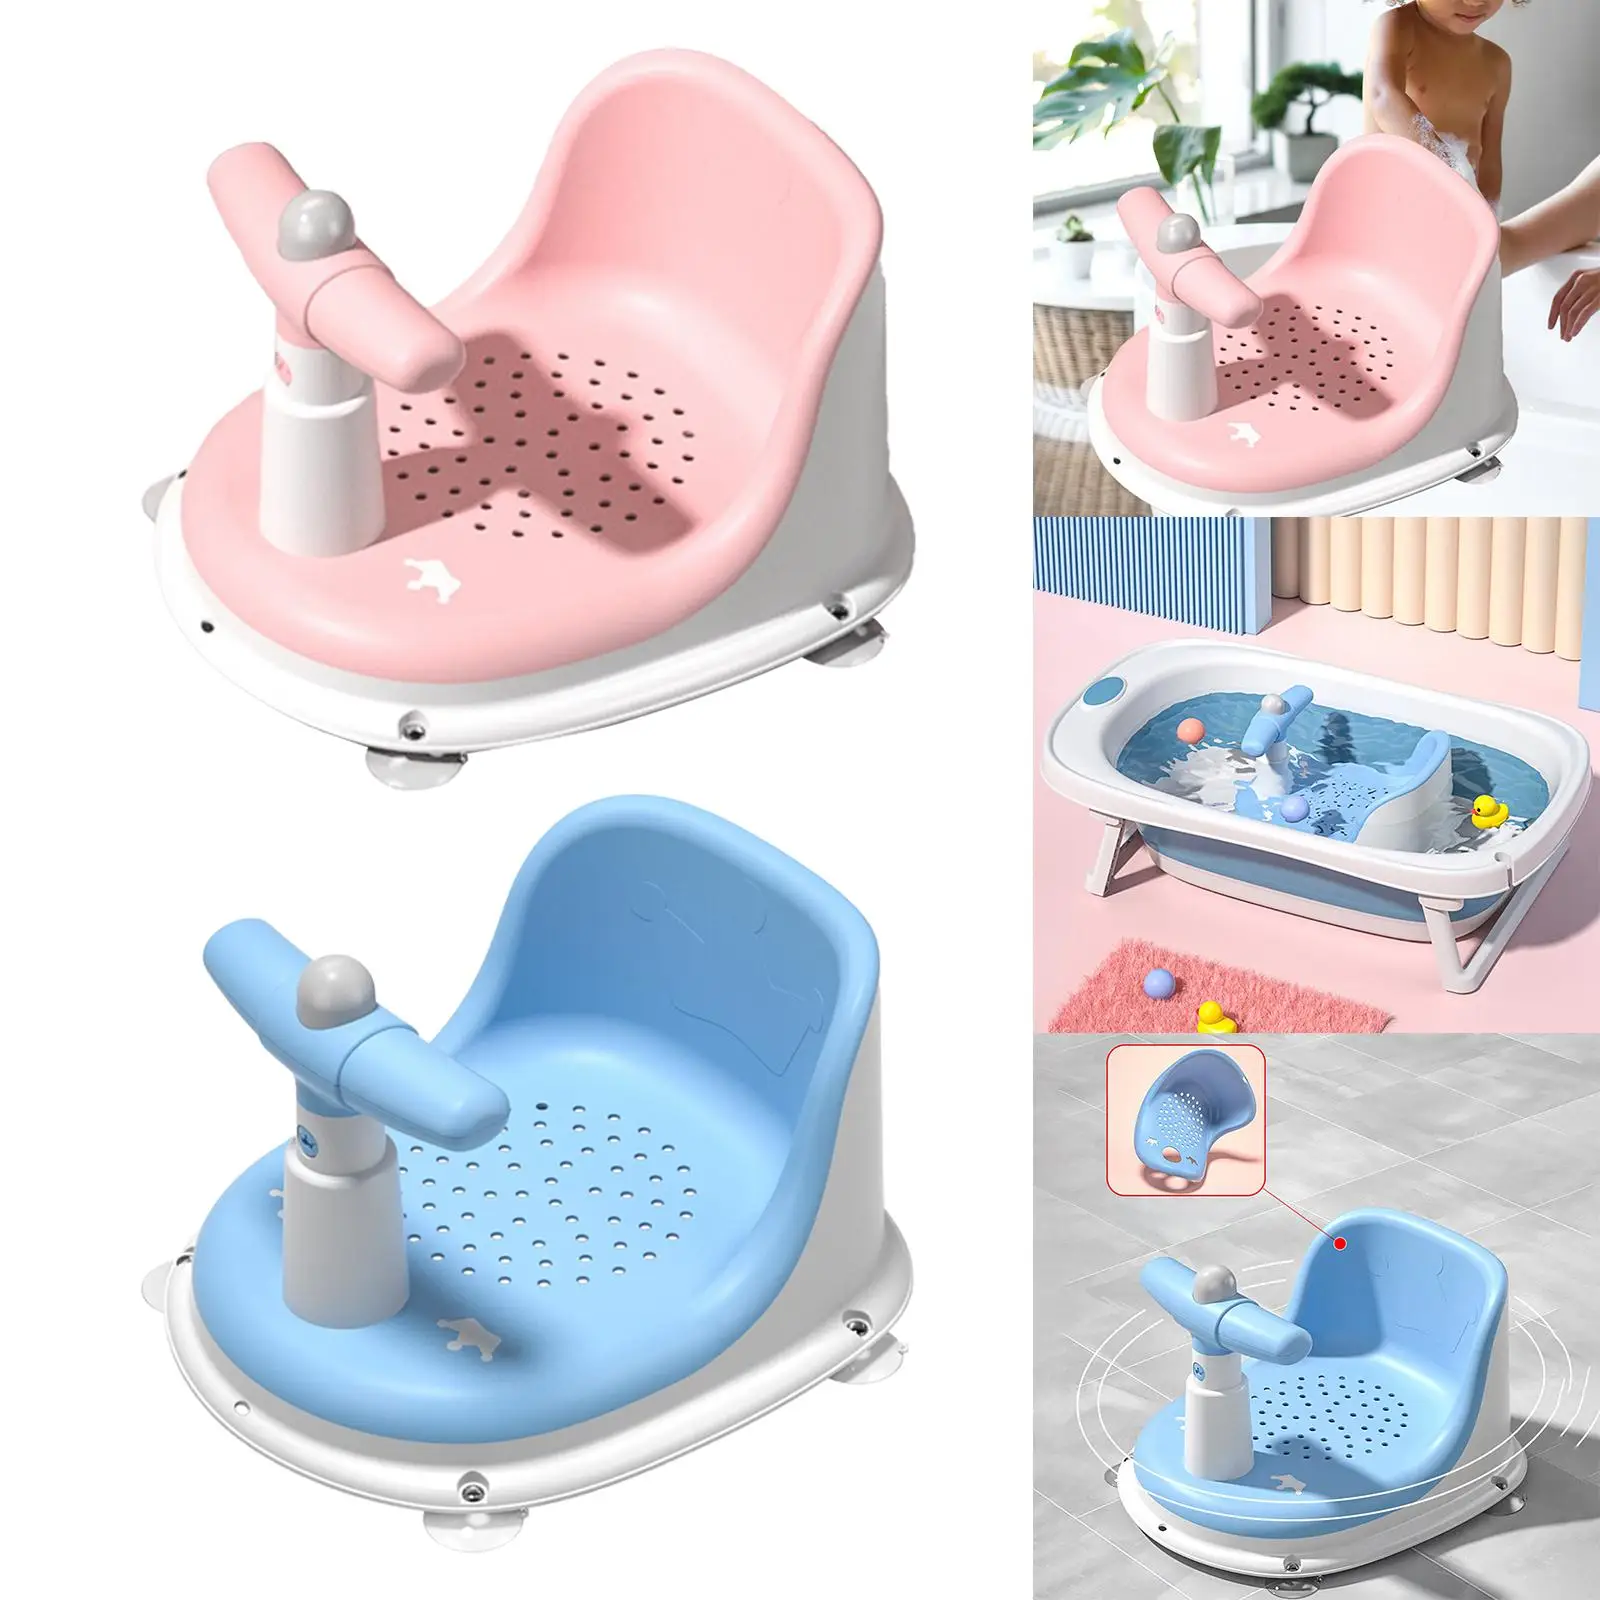 Baby Bathtub Seat Environmentally Friendly Fashionable Hanging Foldable Stable Baby Bath Seat for Living Room Home Bathroom